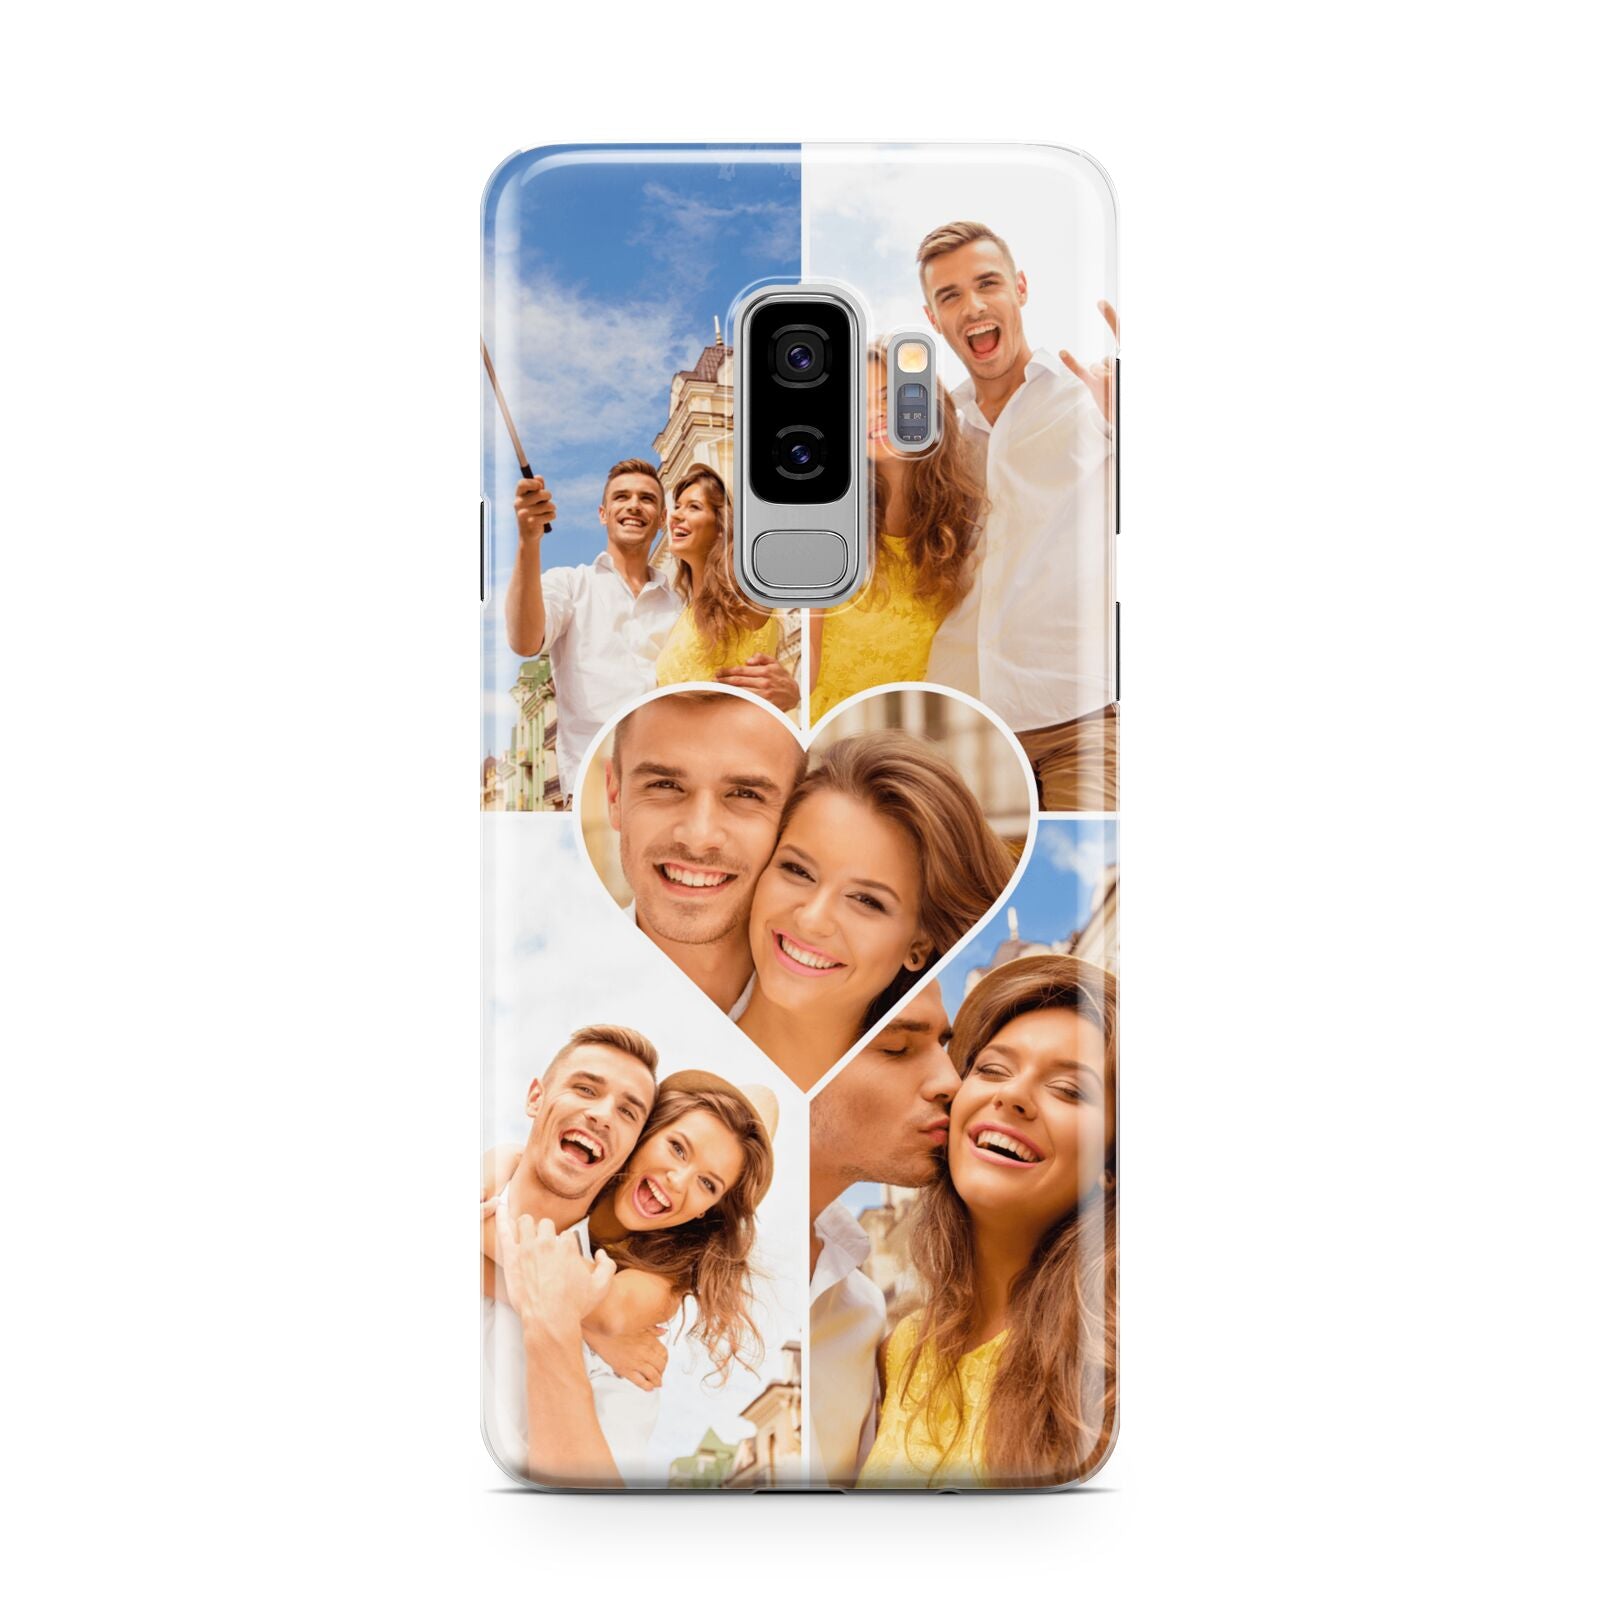 Photo Heart Samsung Galaxy S9 Plus Case on Silver phone